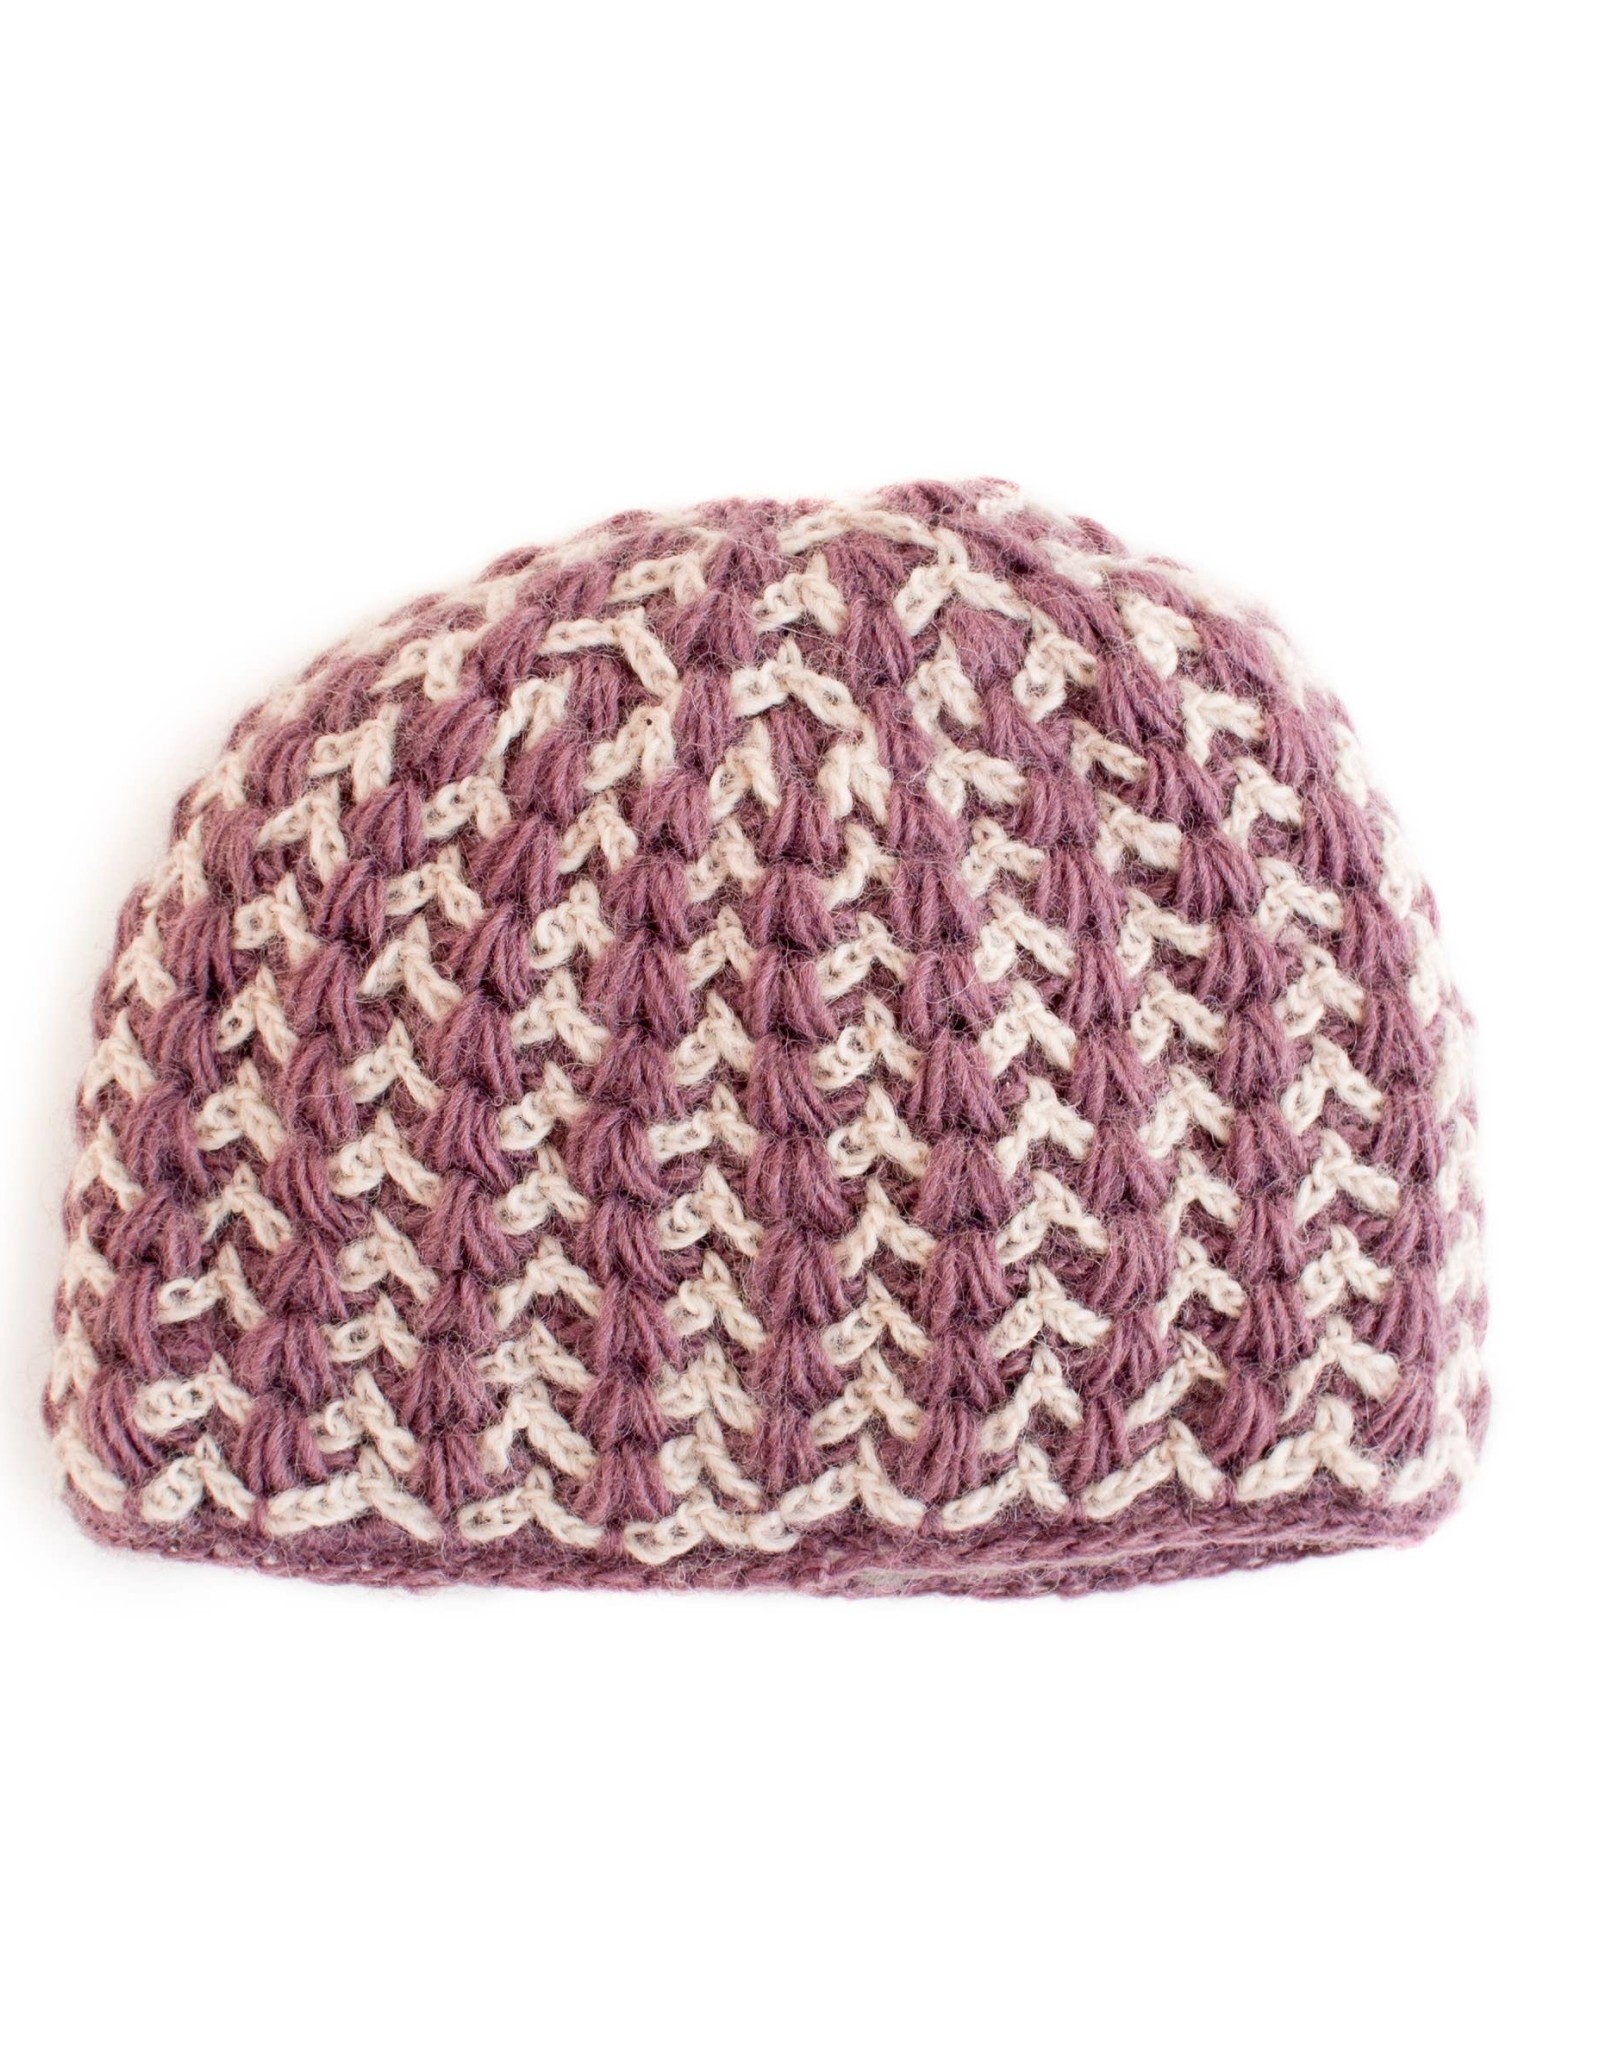 Ganesh Himal Mountain Crochet Wool Hat